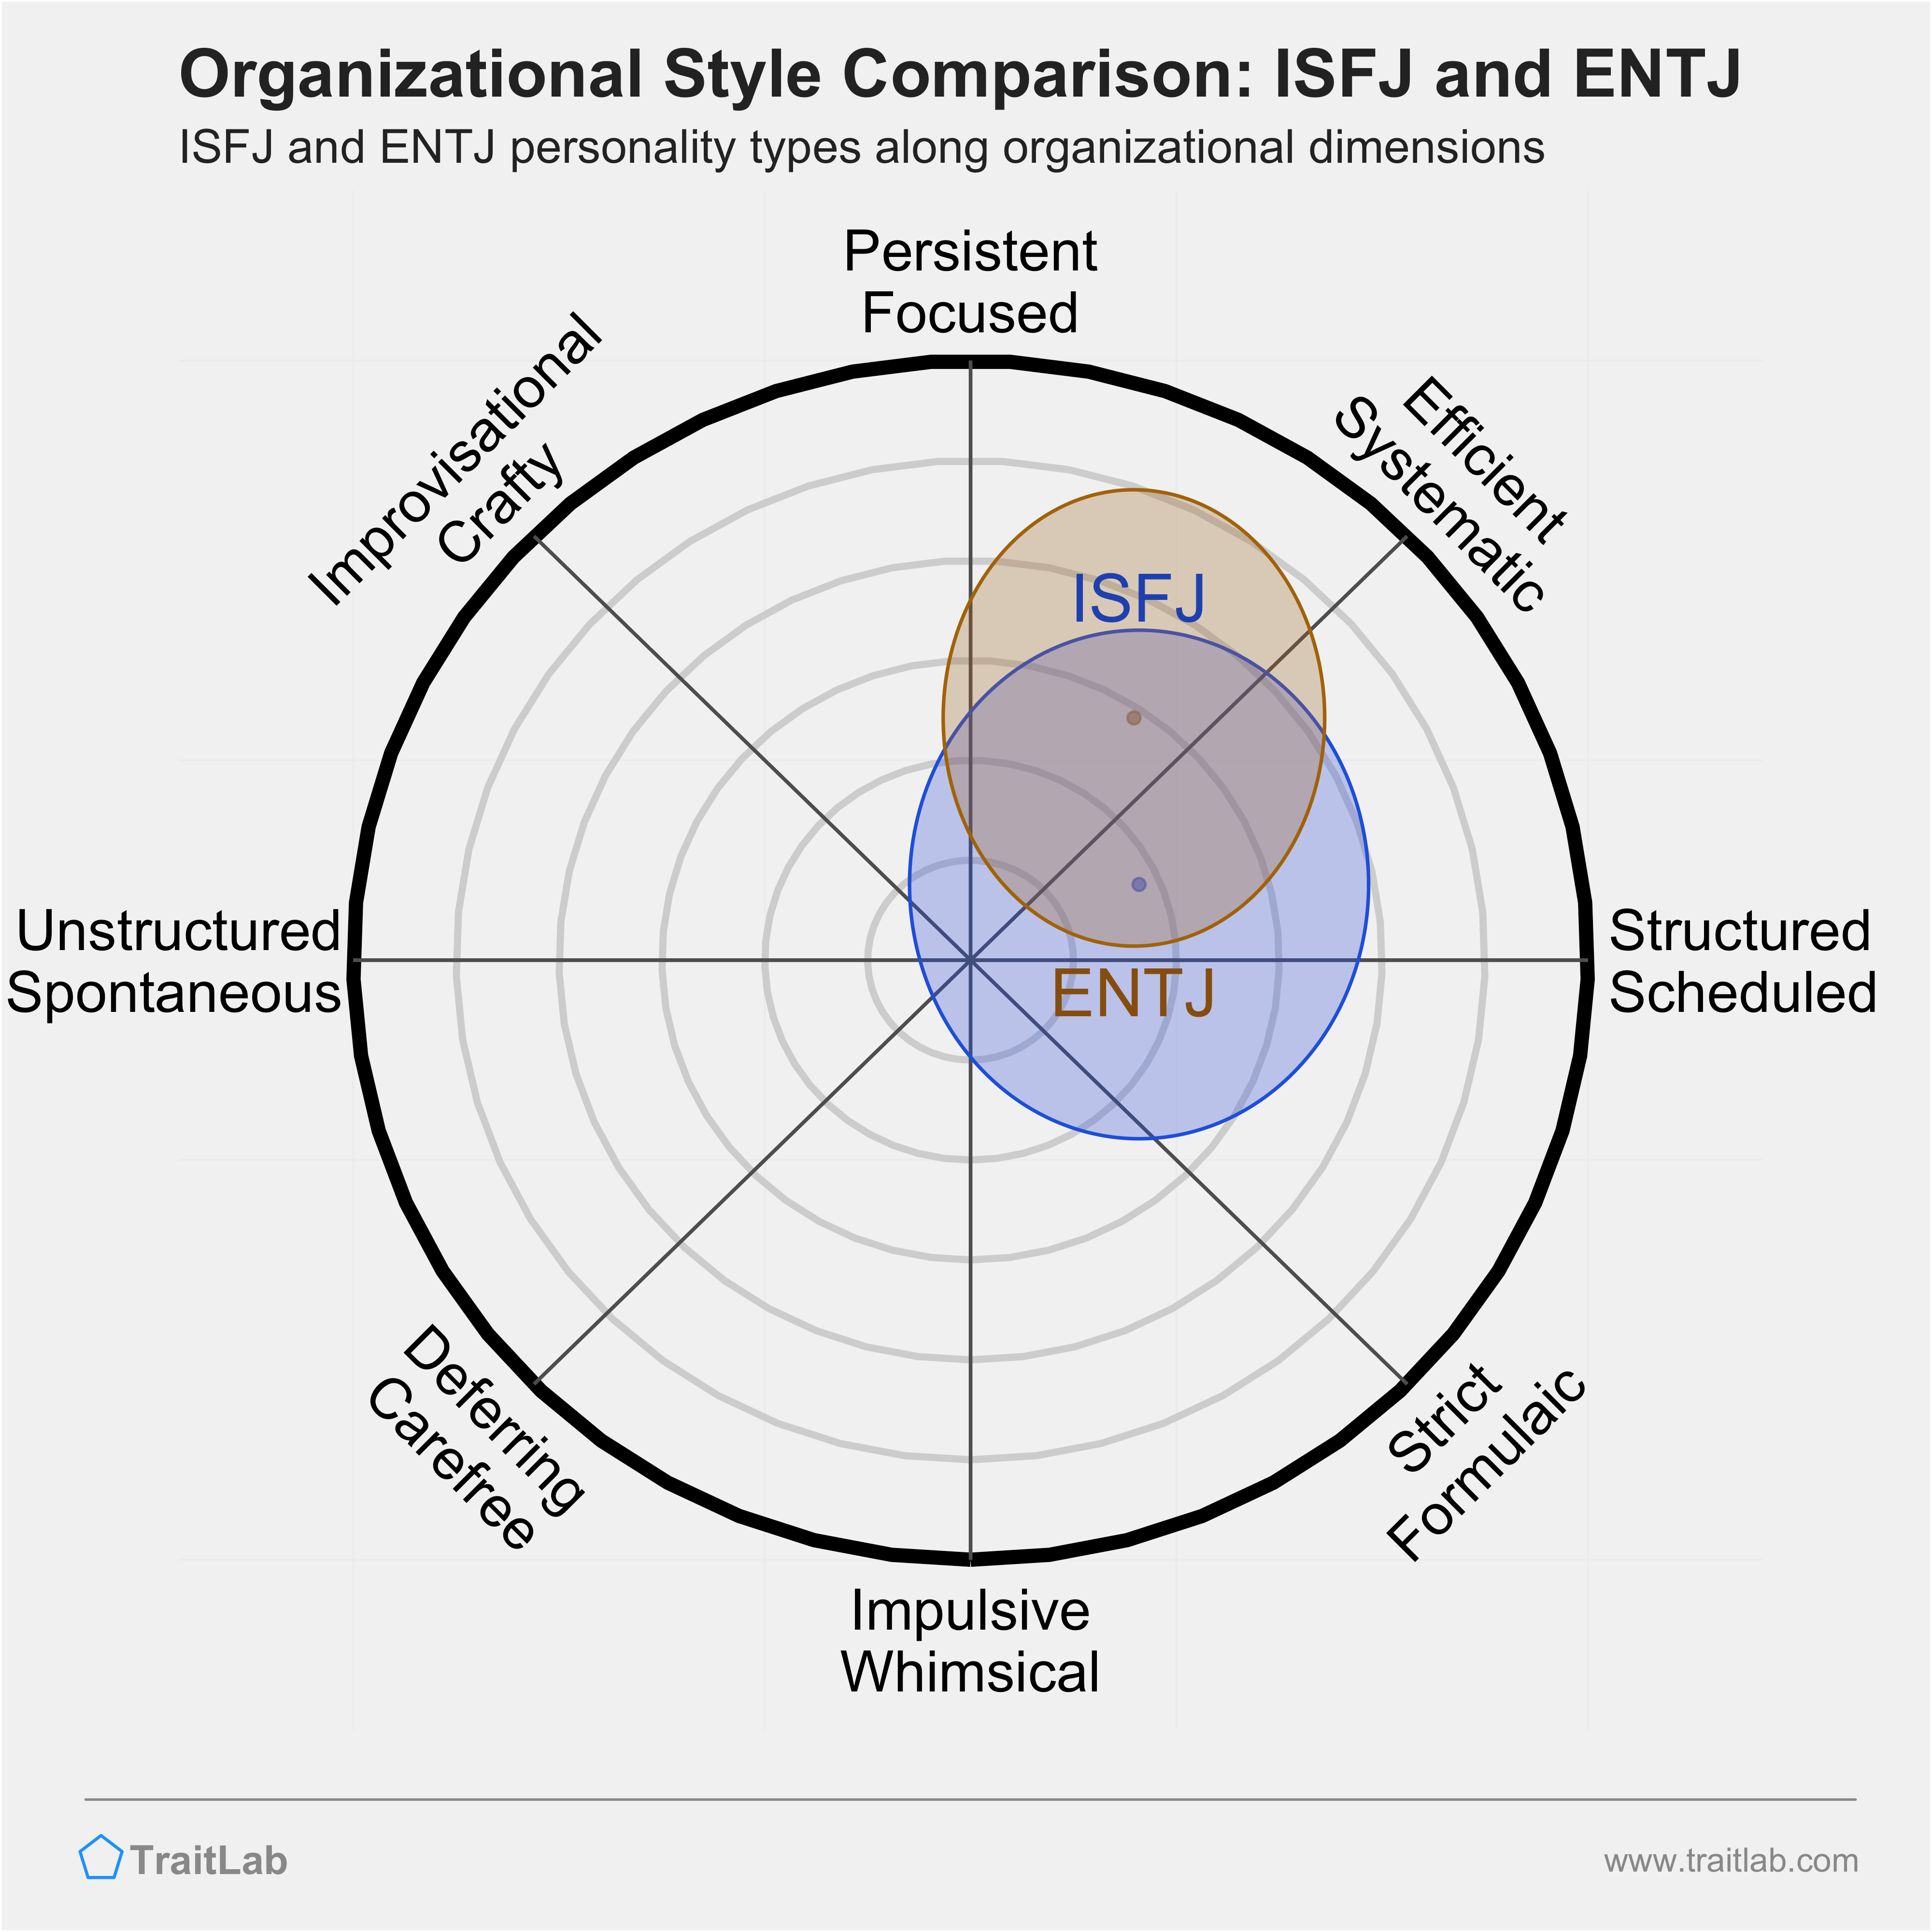 ISFJ and ENTJ comparison across organizational dimensions